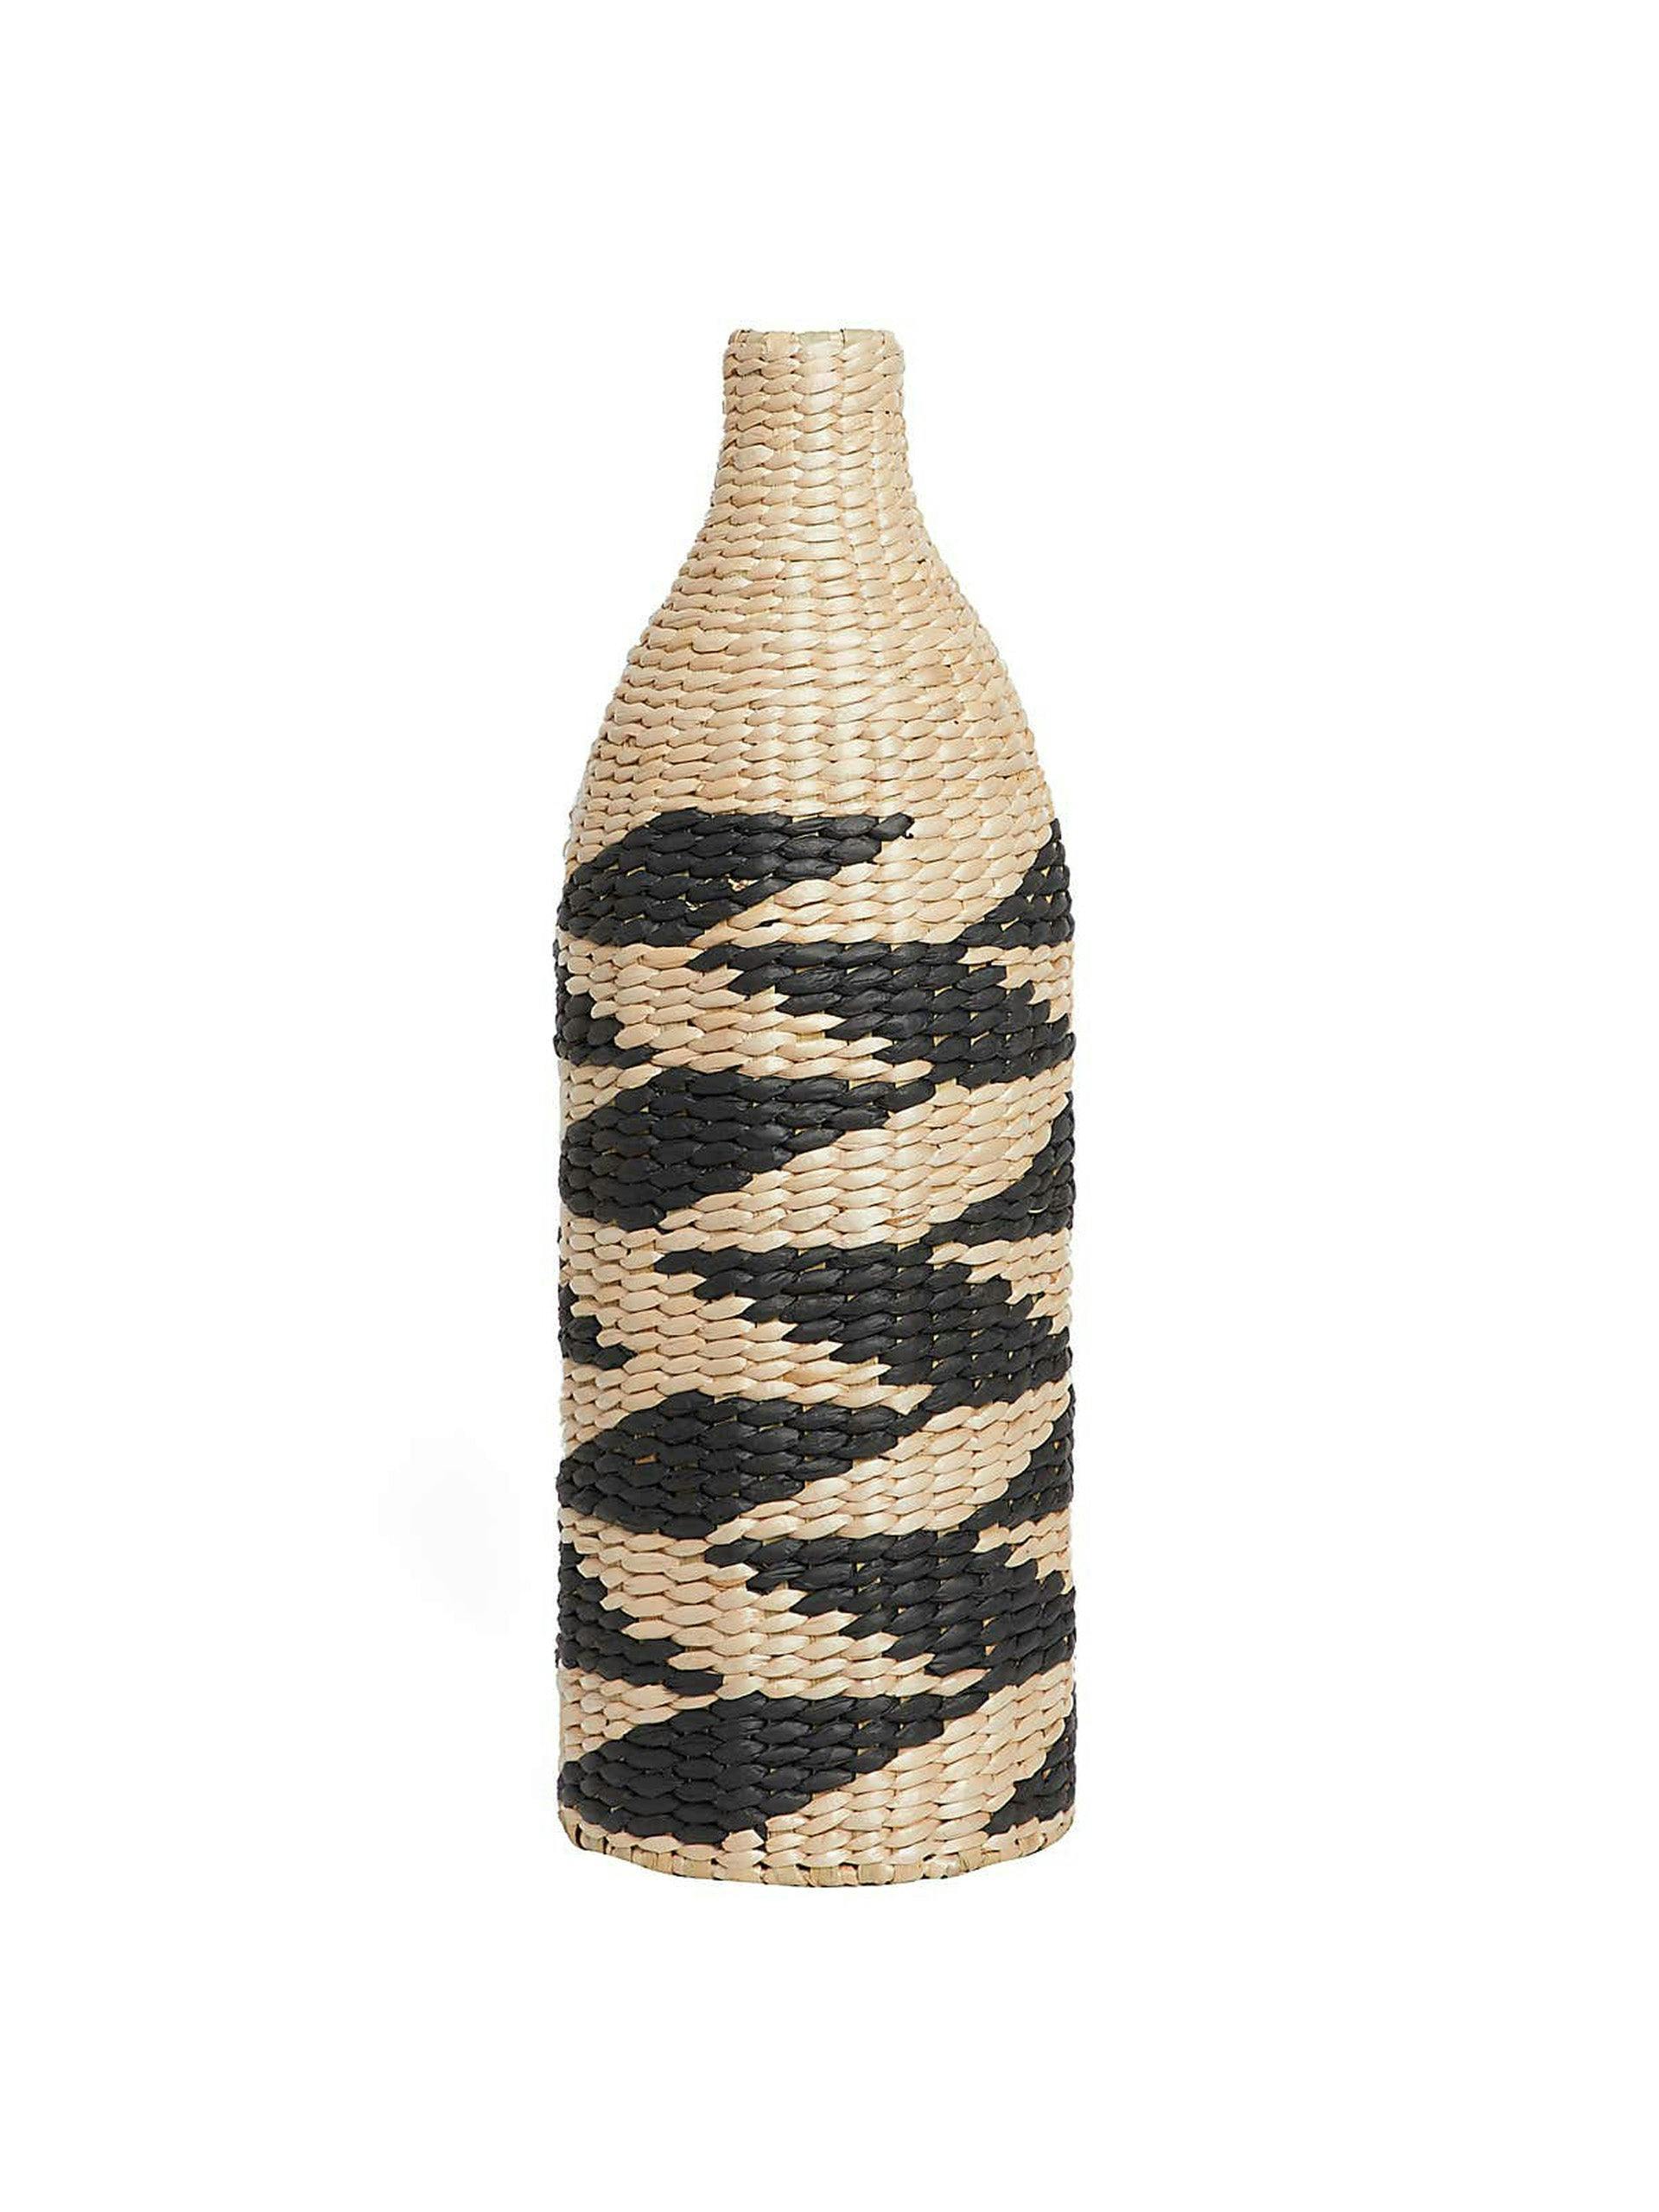 Woven patterned straw bottle vase